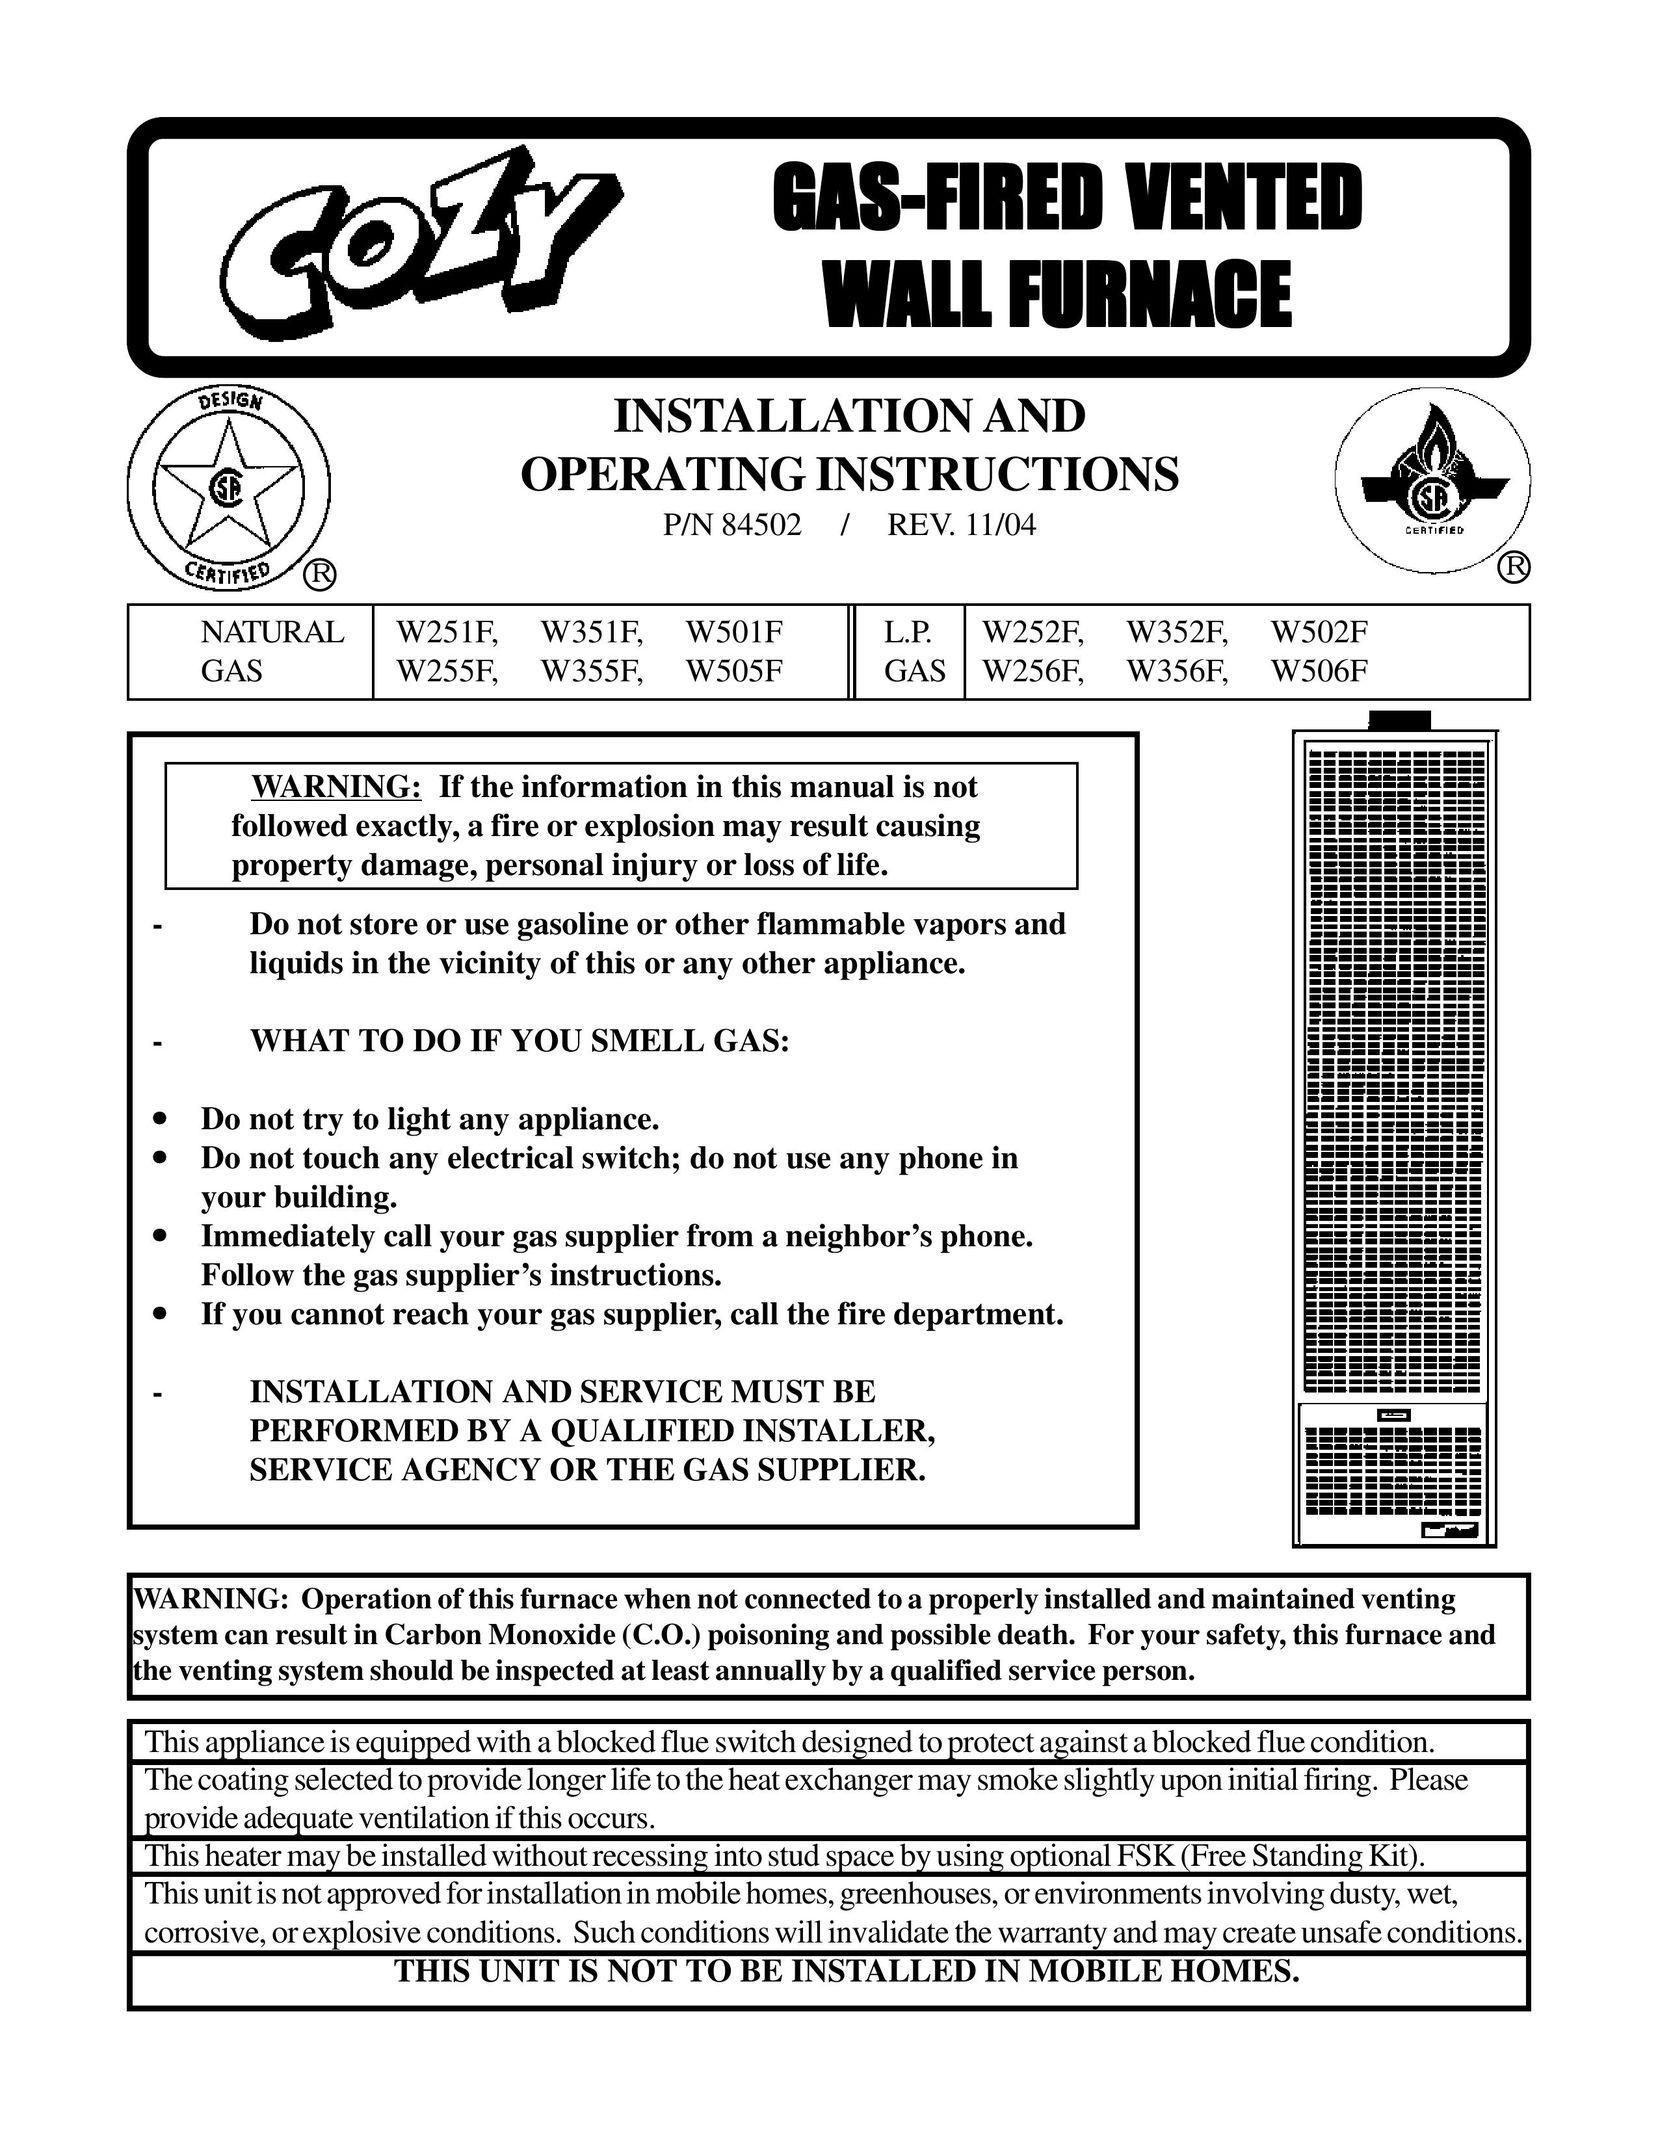 Louisville Tin and Stove W356F Furnace User Manual